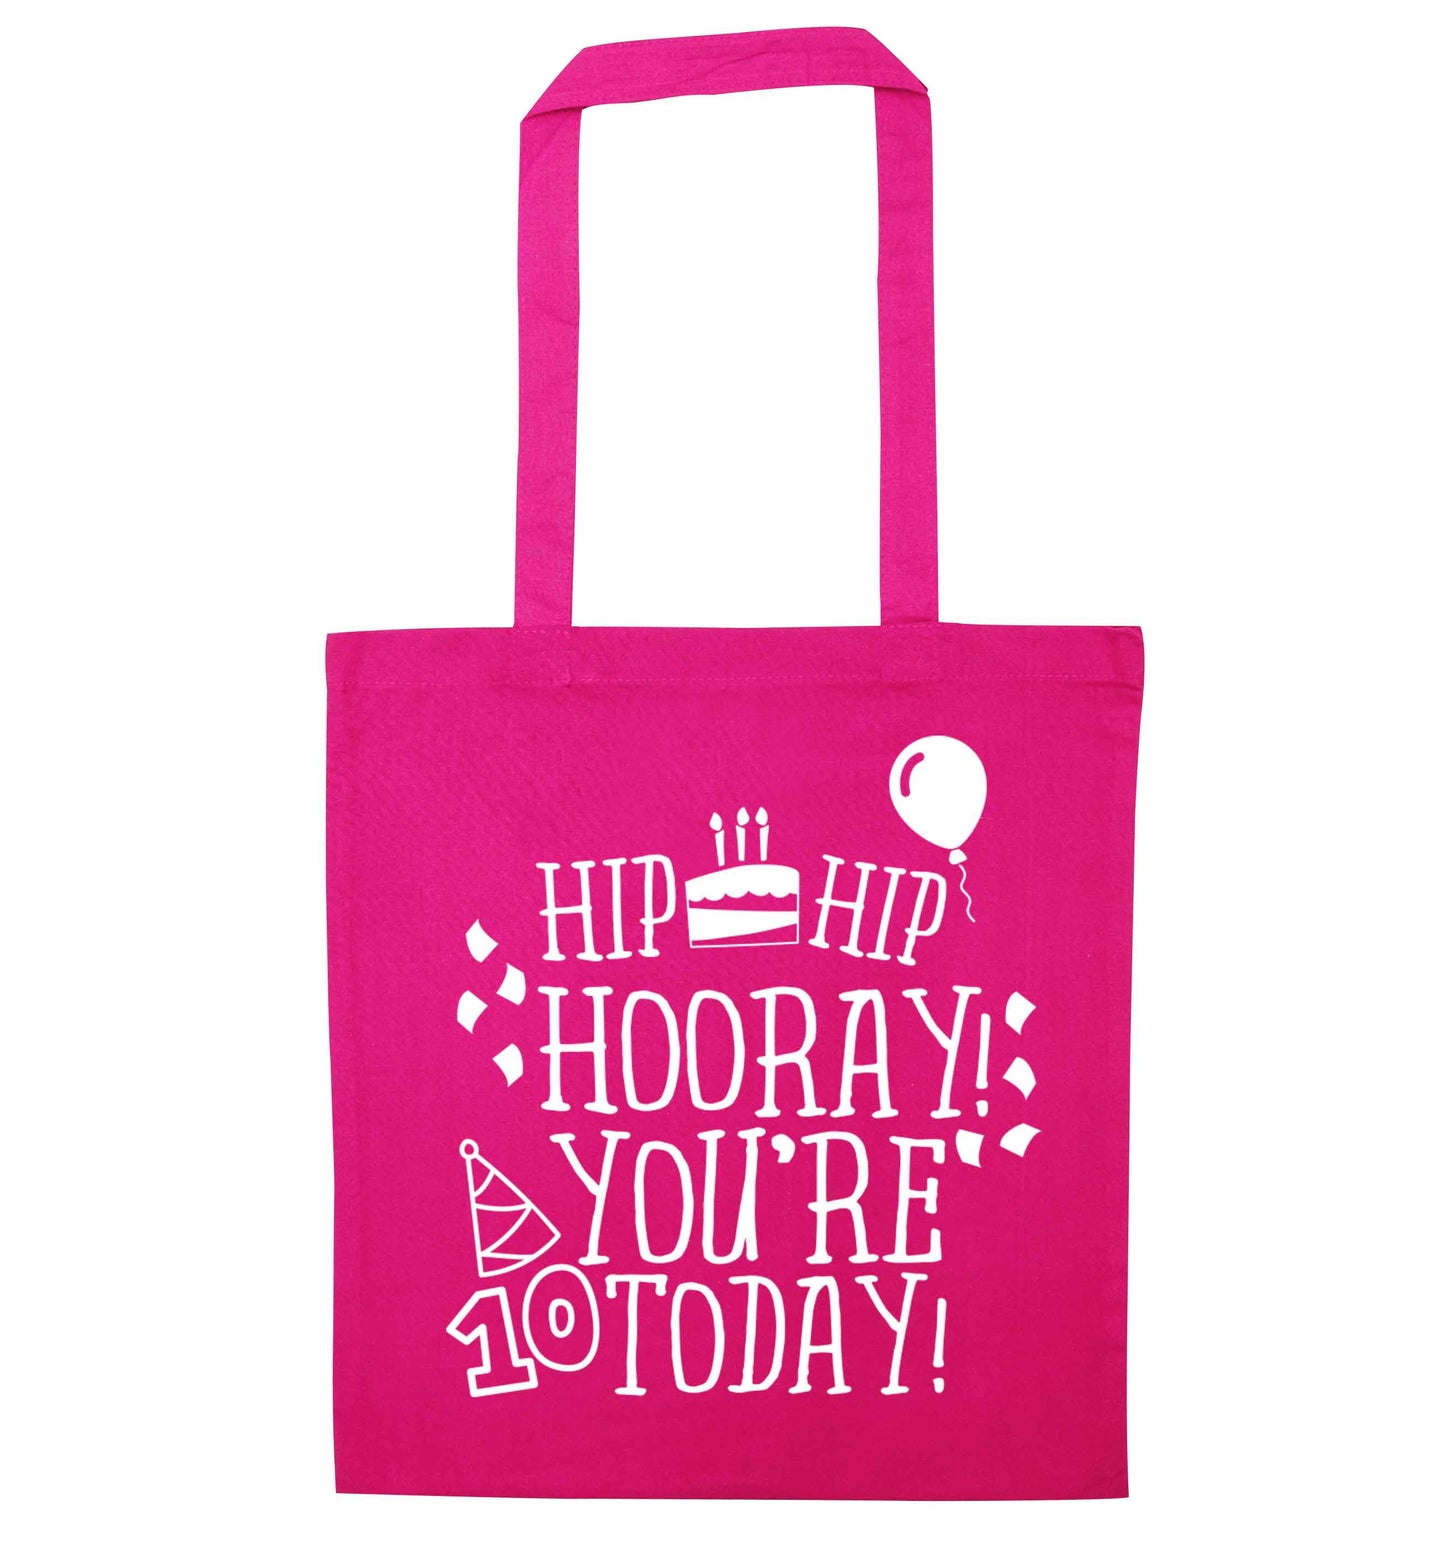 Hip hip hooray you're ten today! pink tote bag